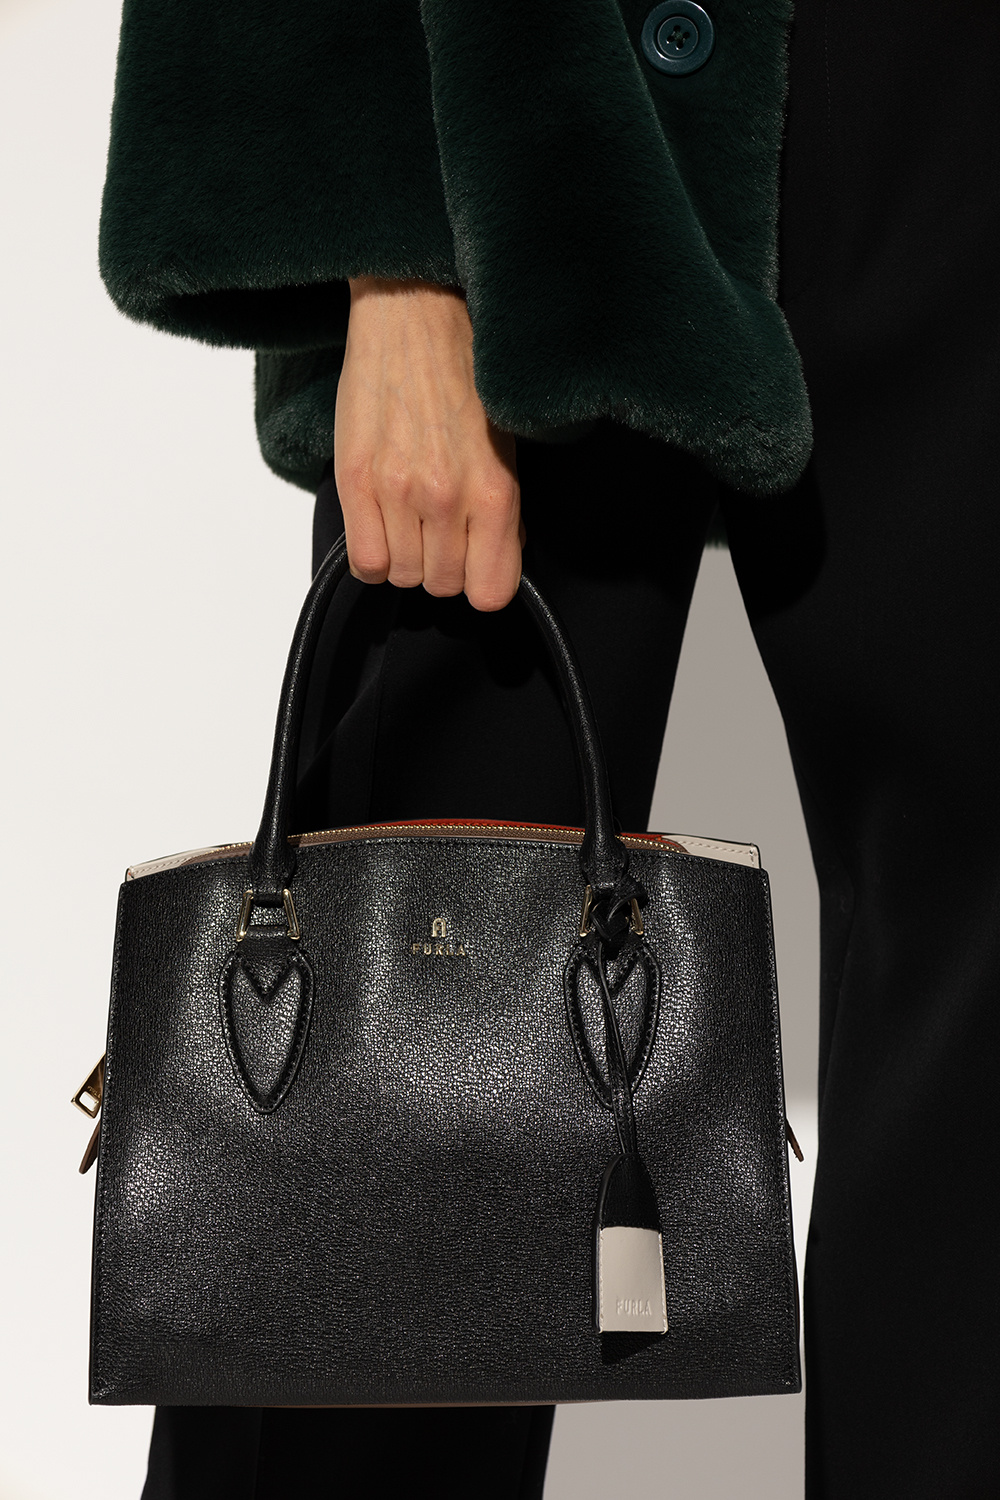 Furla ‘Magnolia Medium’ shopper bag